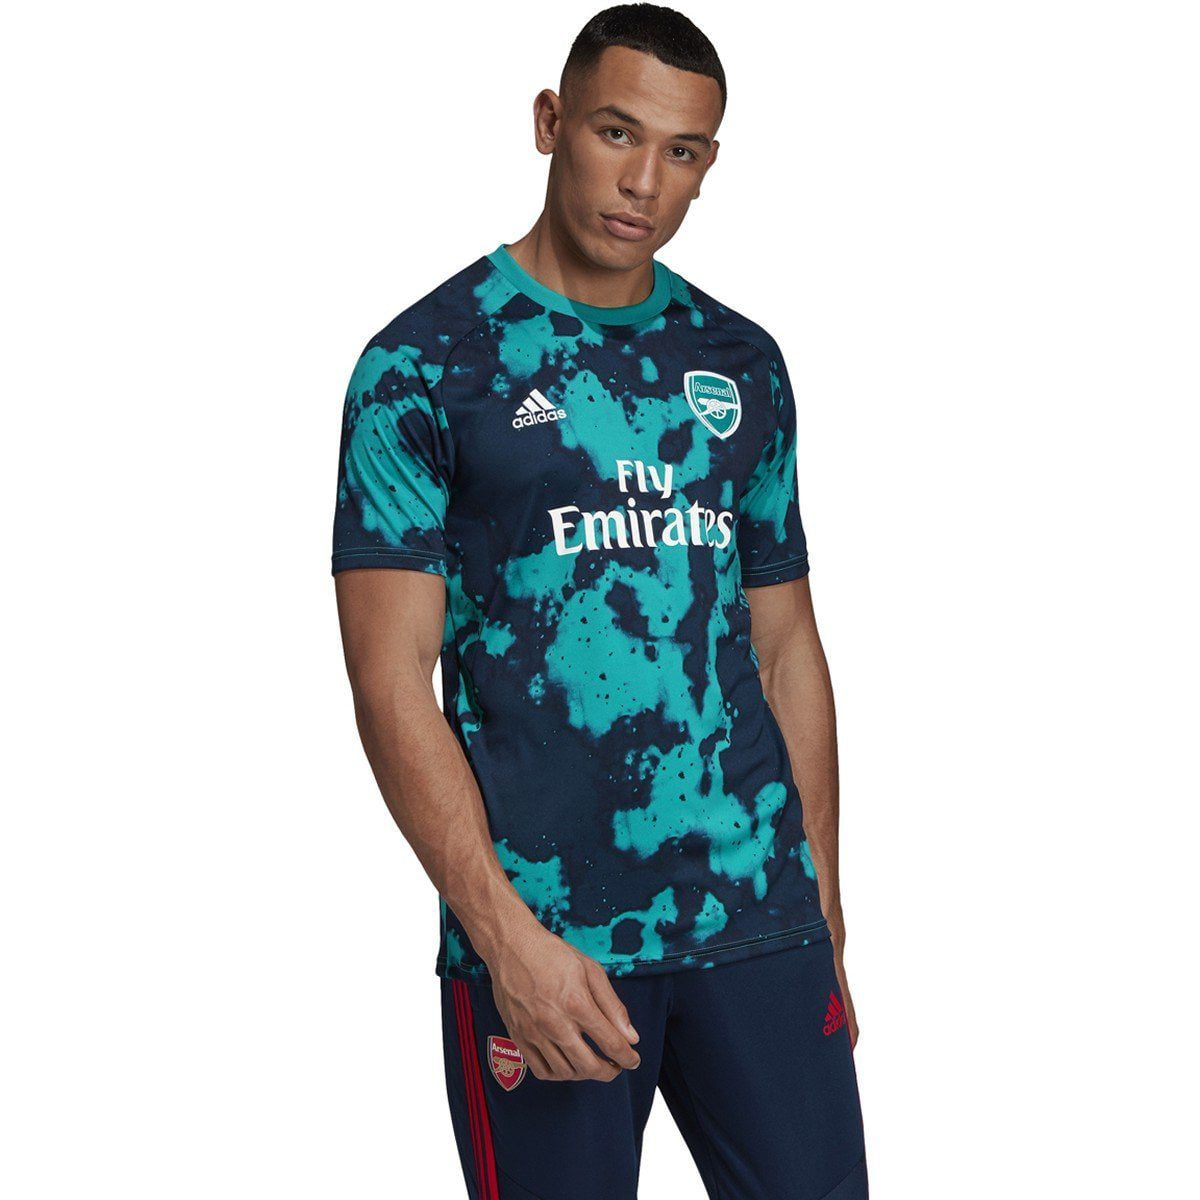 Adidas - adidas Men's Arsenal FC Prematch Shirt 2019-20 | FJ9295 - Walmart.com